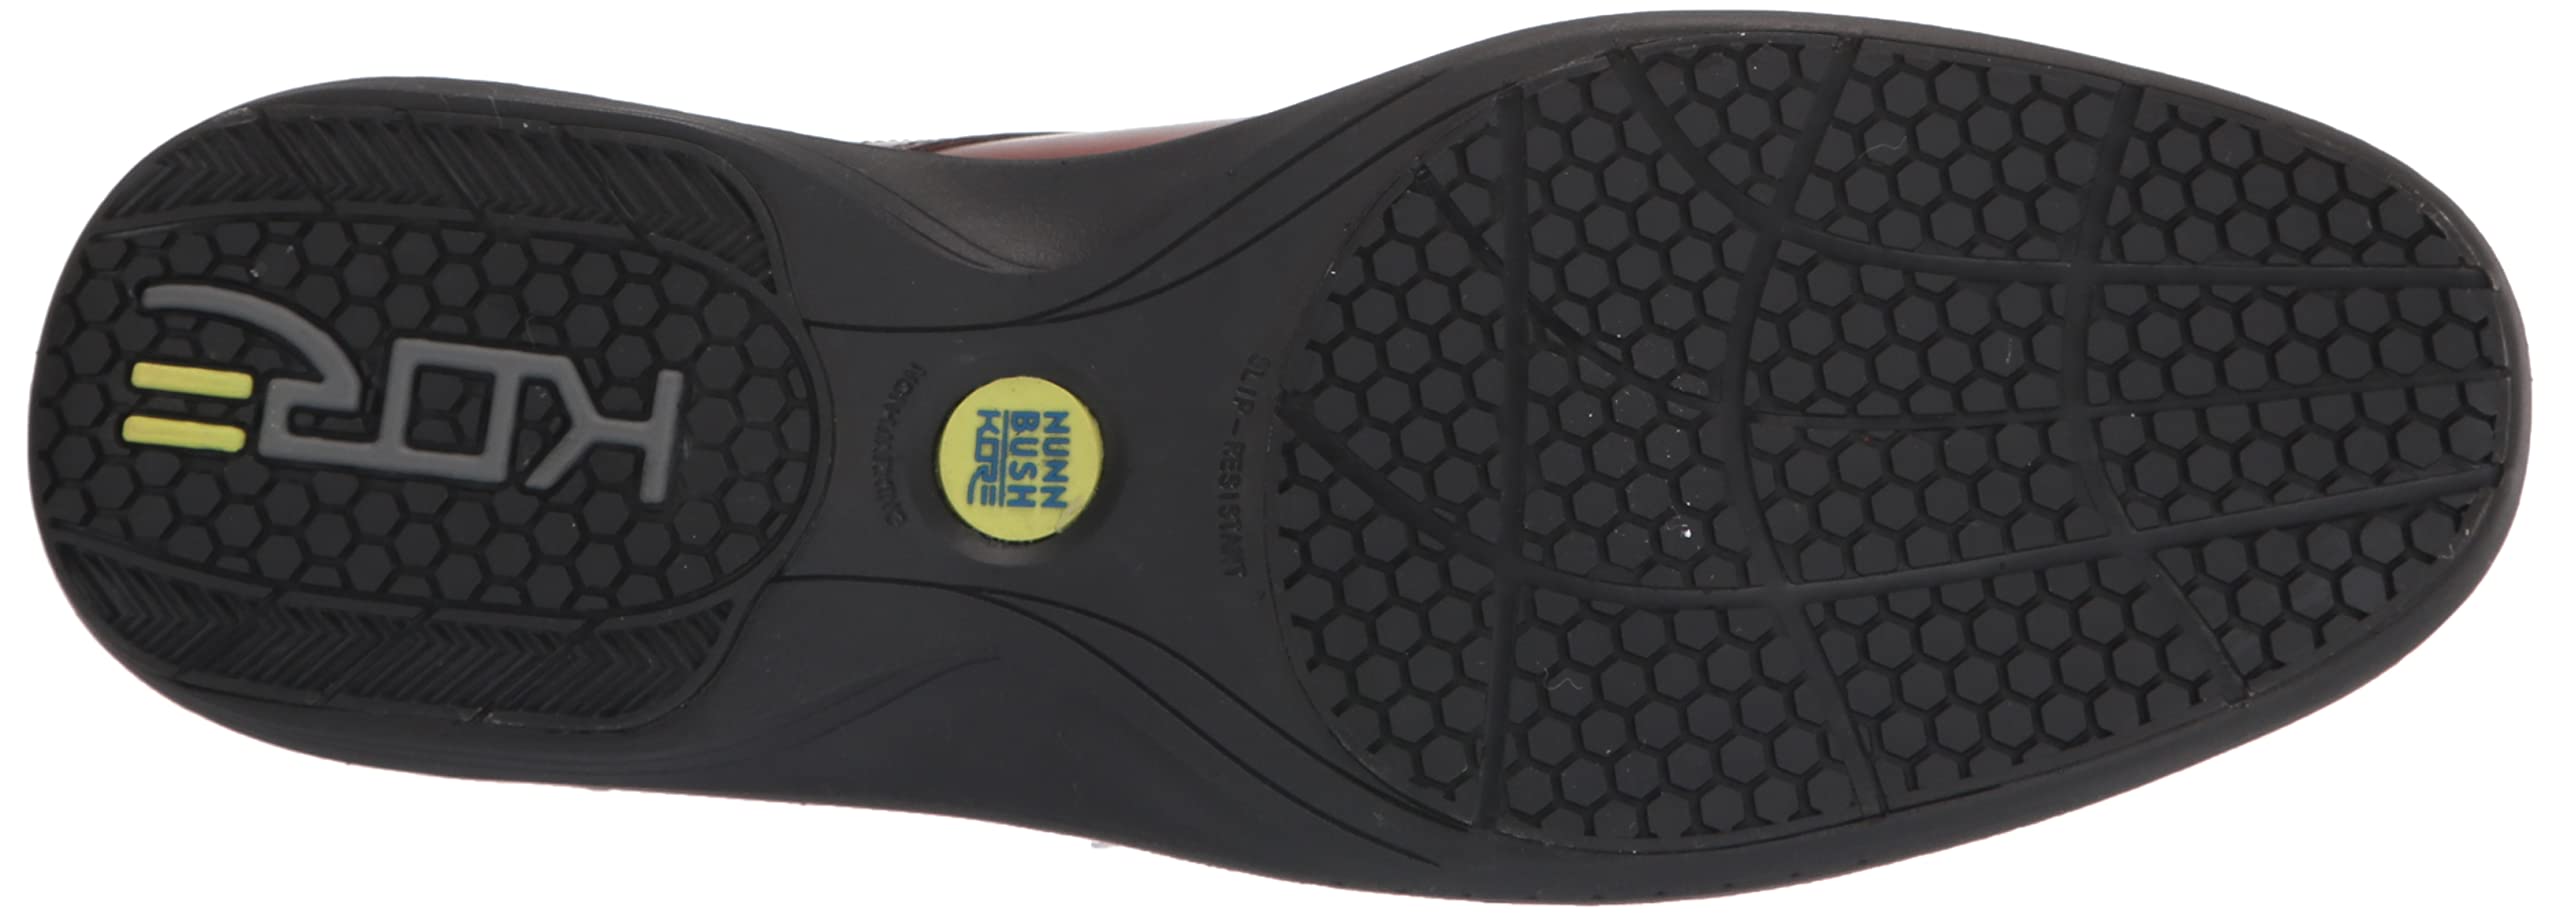 Nunn Bush Men's Pro Plain Toe Oxford with Kore Slip Resistant Comfort Technology